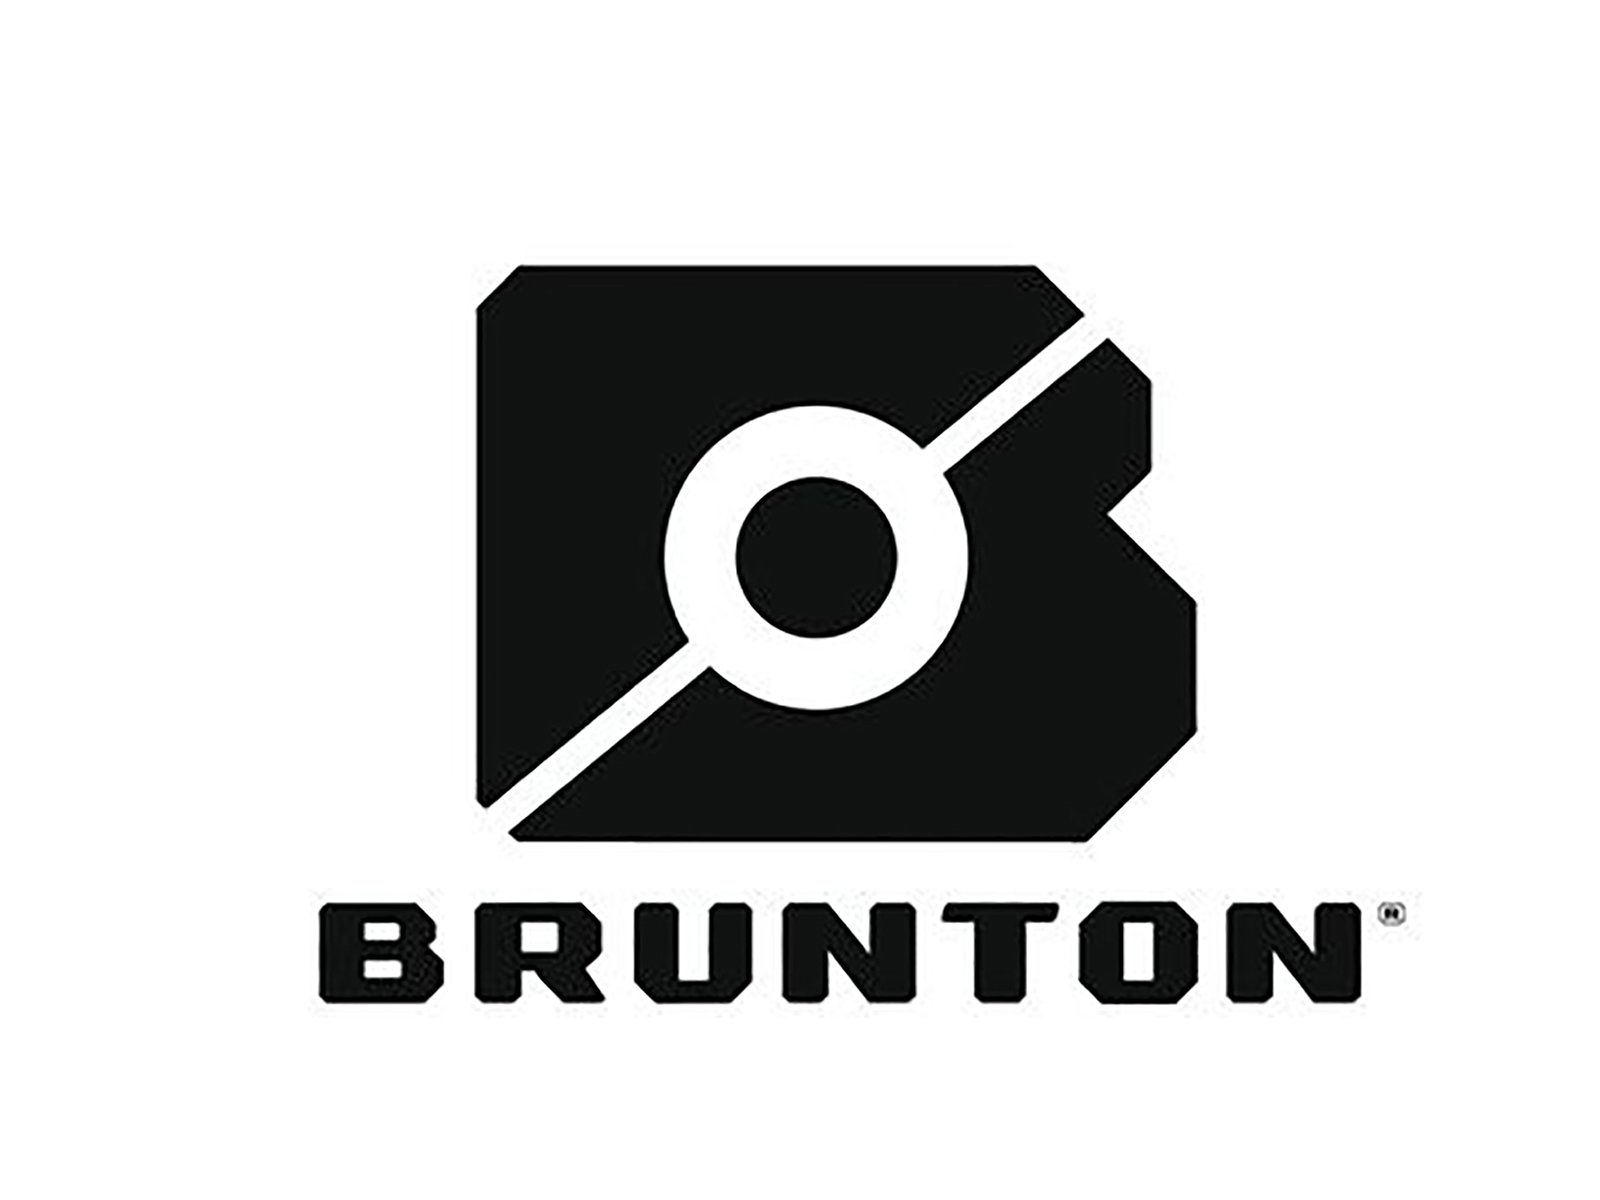 BRUNTON